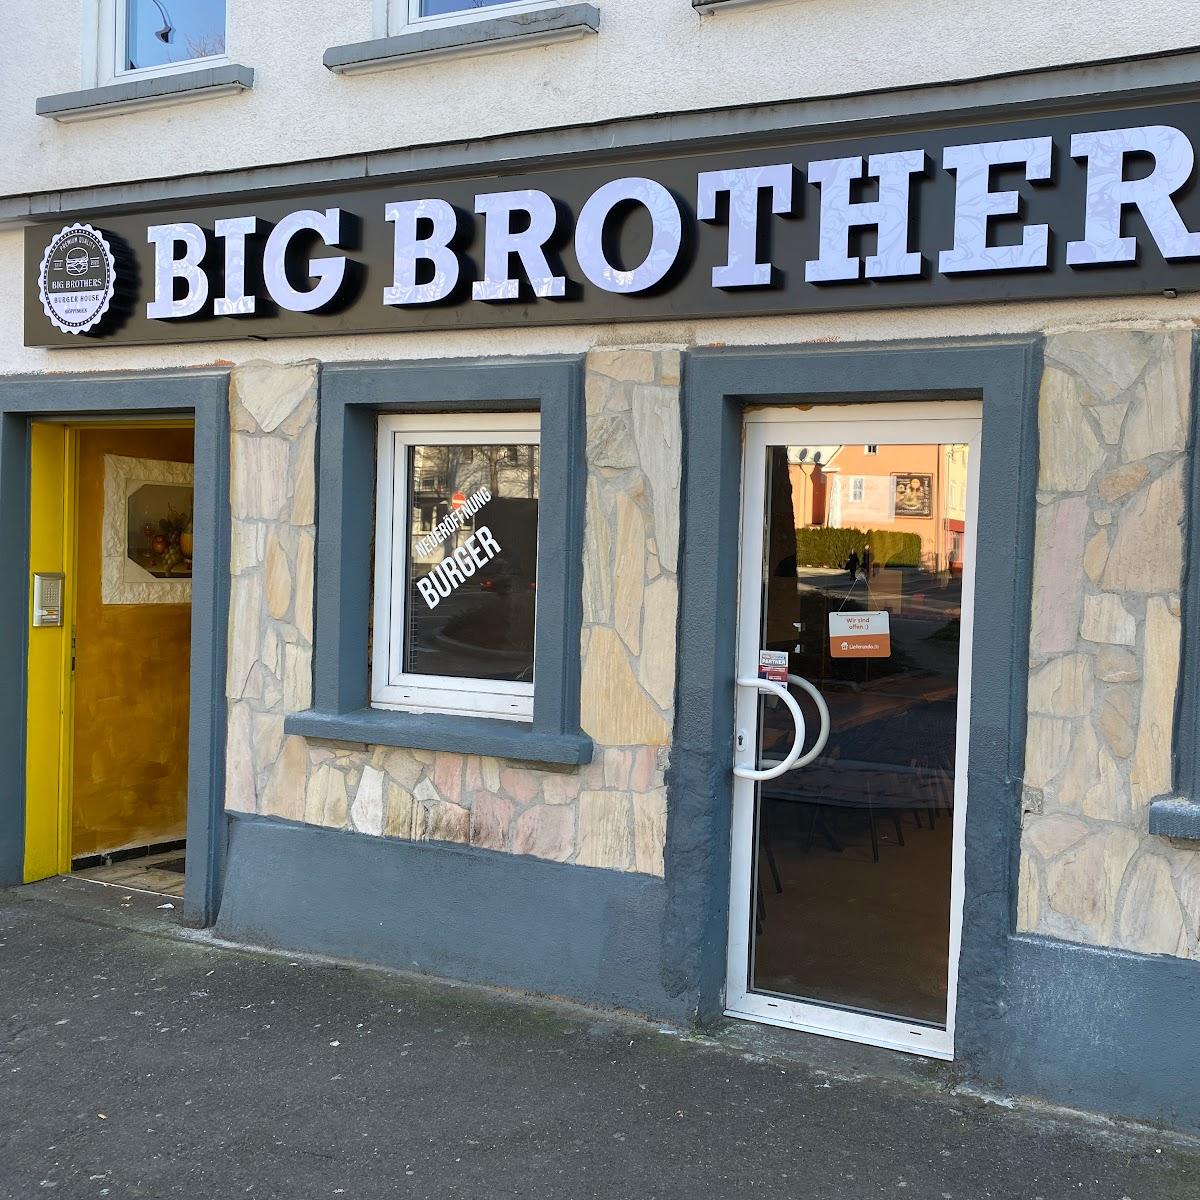 Restaurant "Big Brothers Burger House" in Göppingen